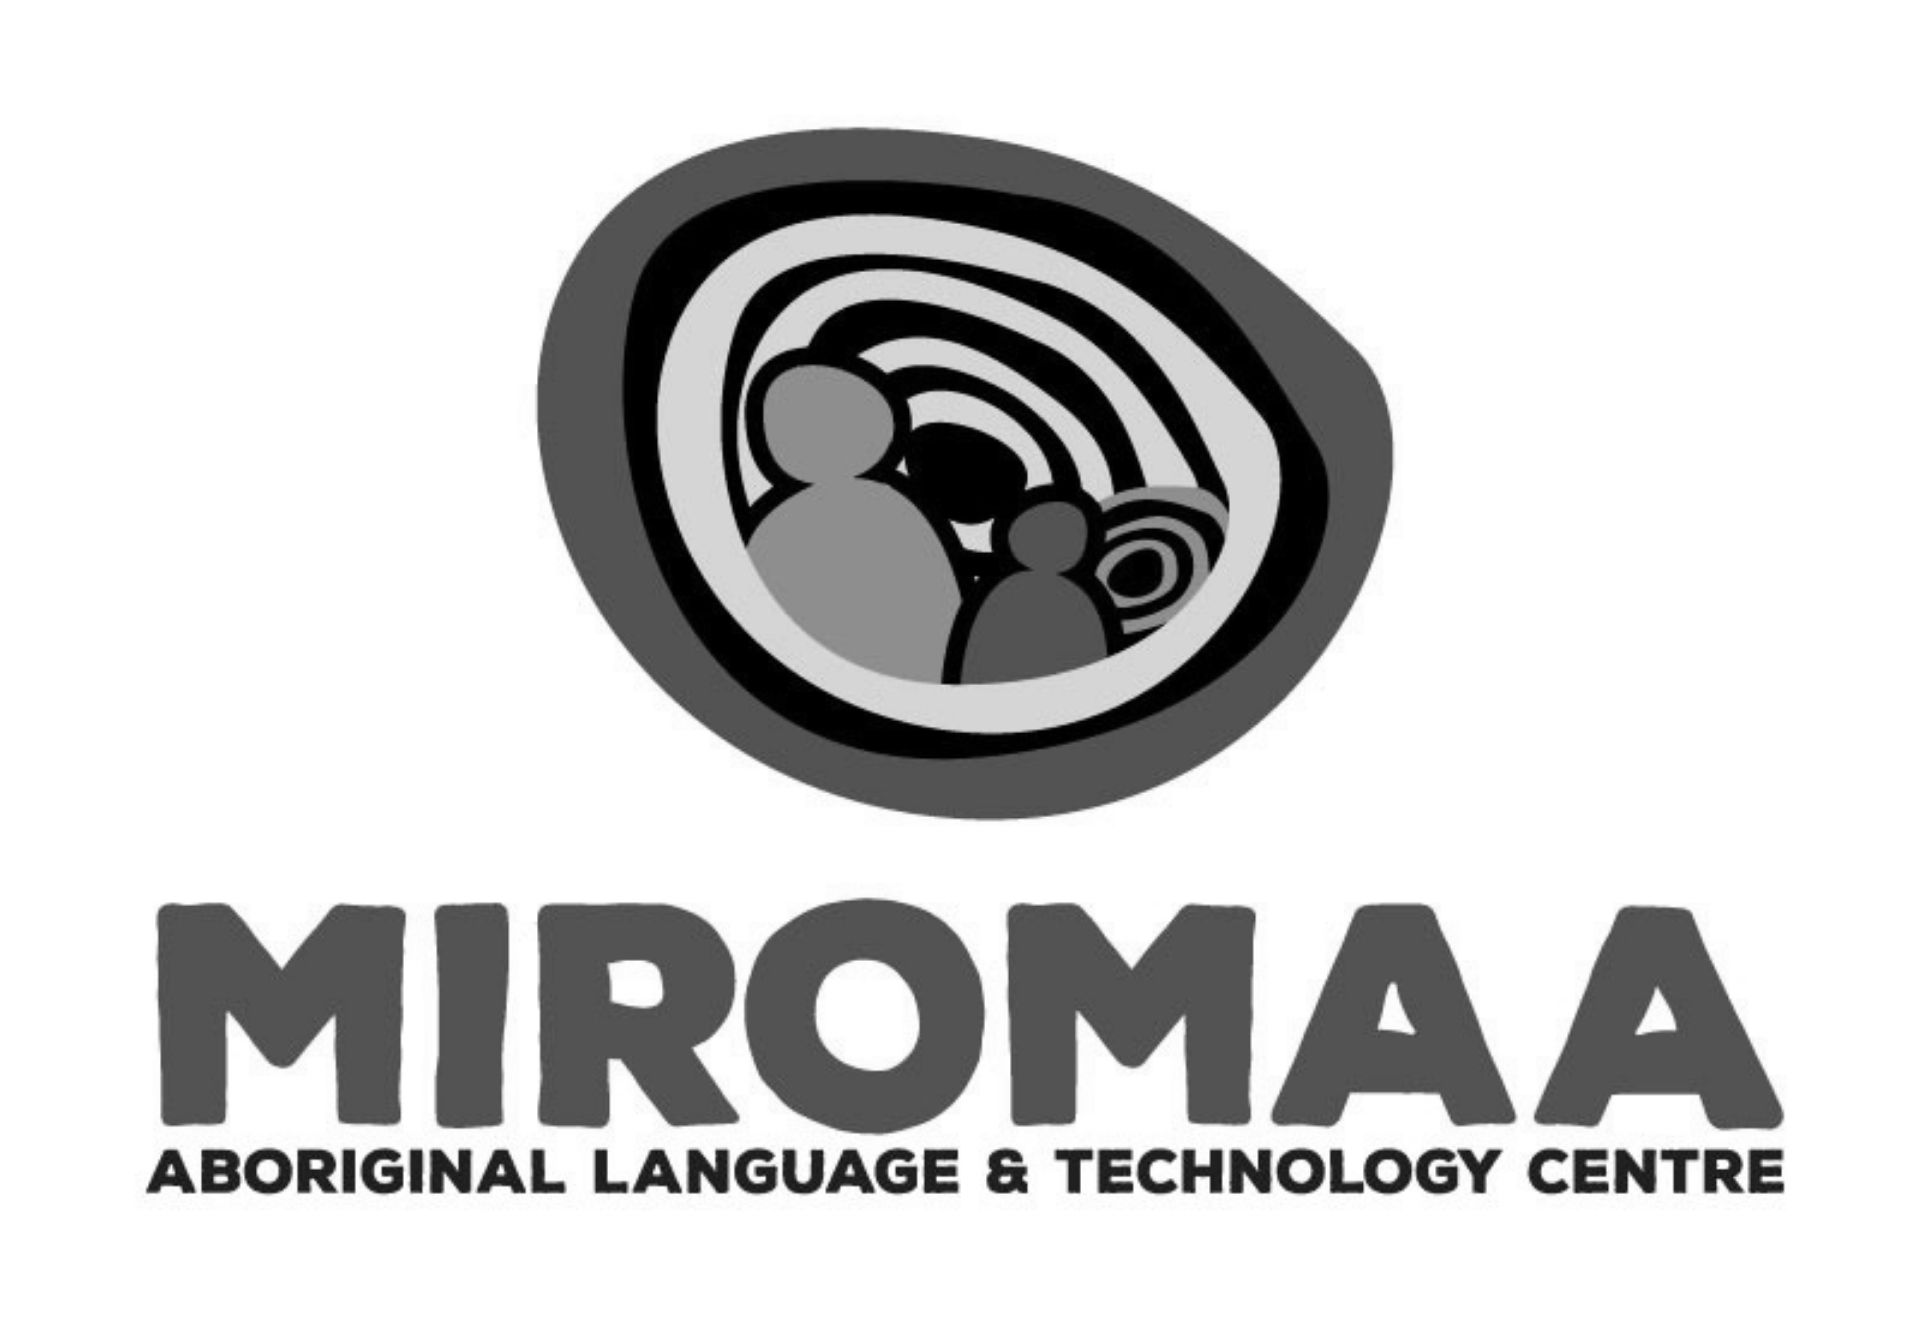 Miromaa Language & Technology Centre